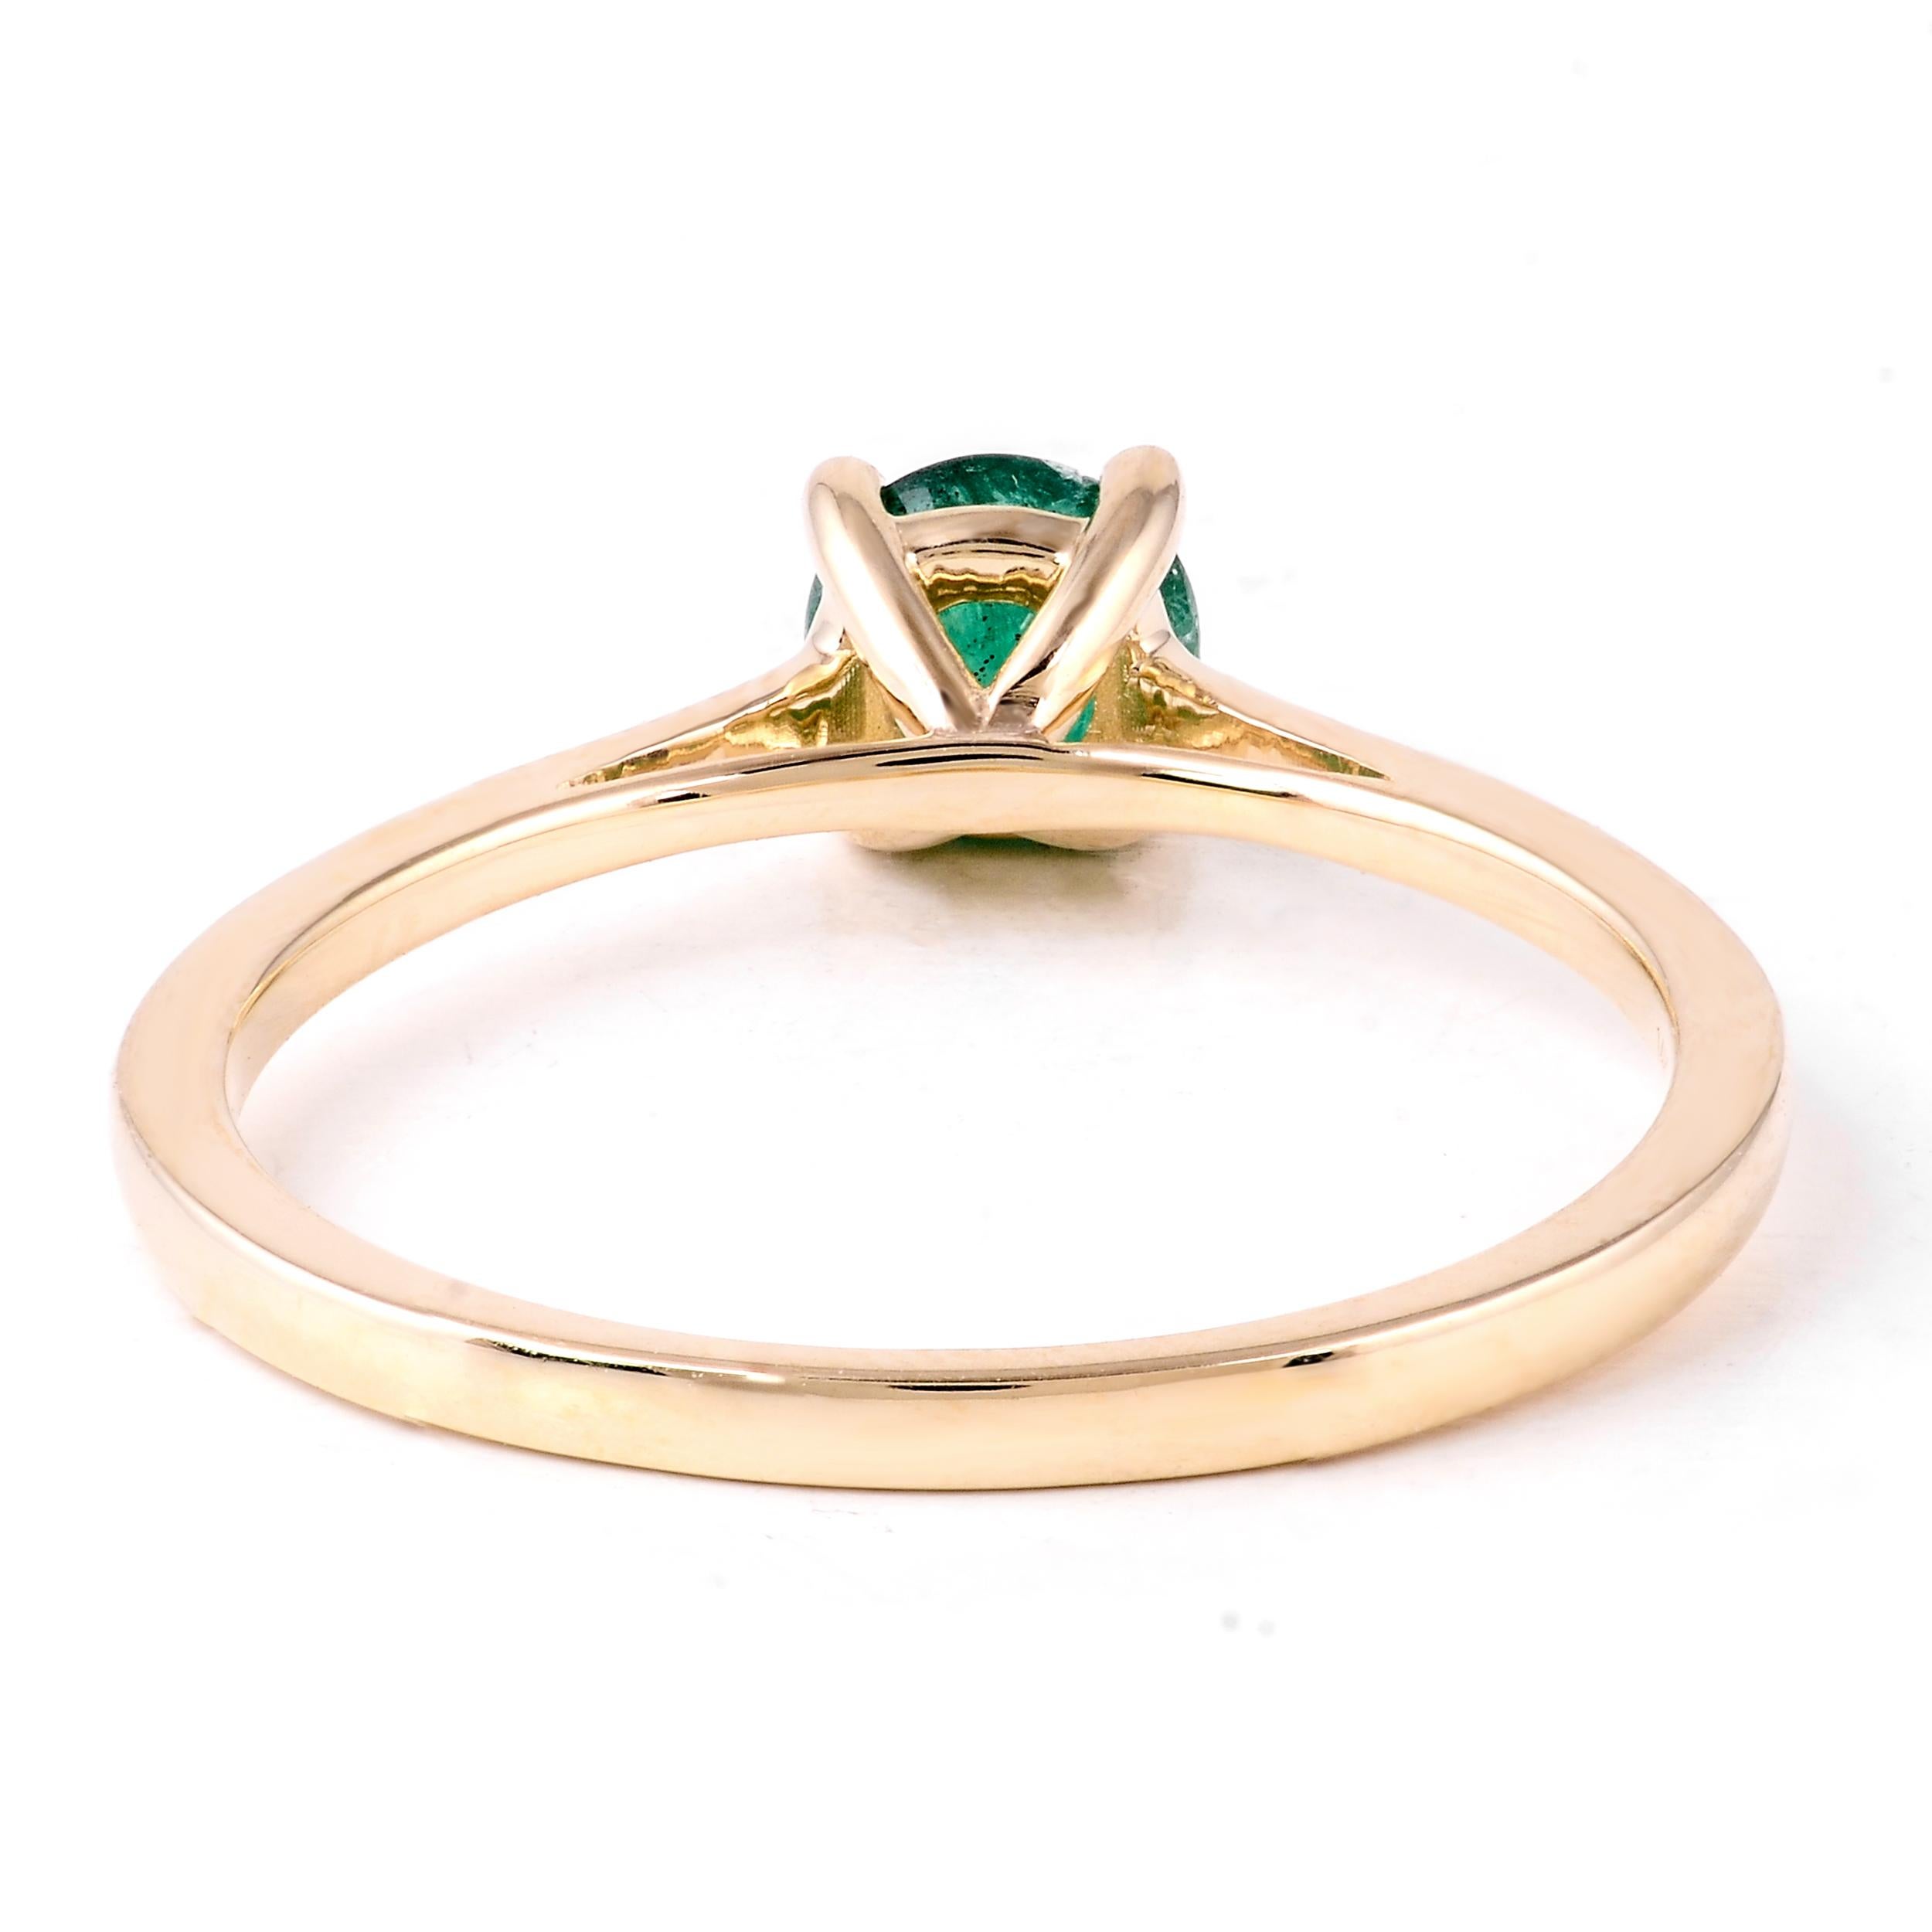 Luxurious 14K Emerald Cocktail Ring, Size 7 - Elegant Statement Jewelry Piece 2